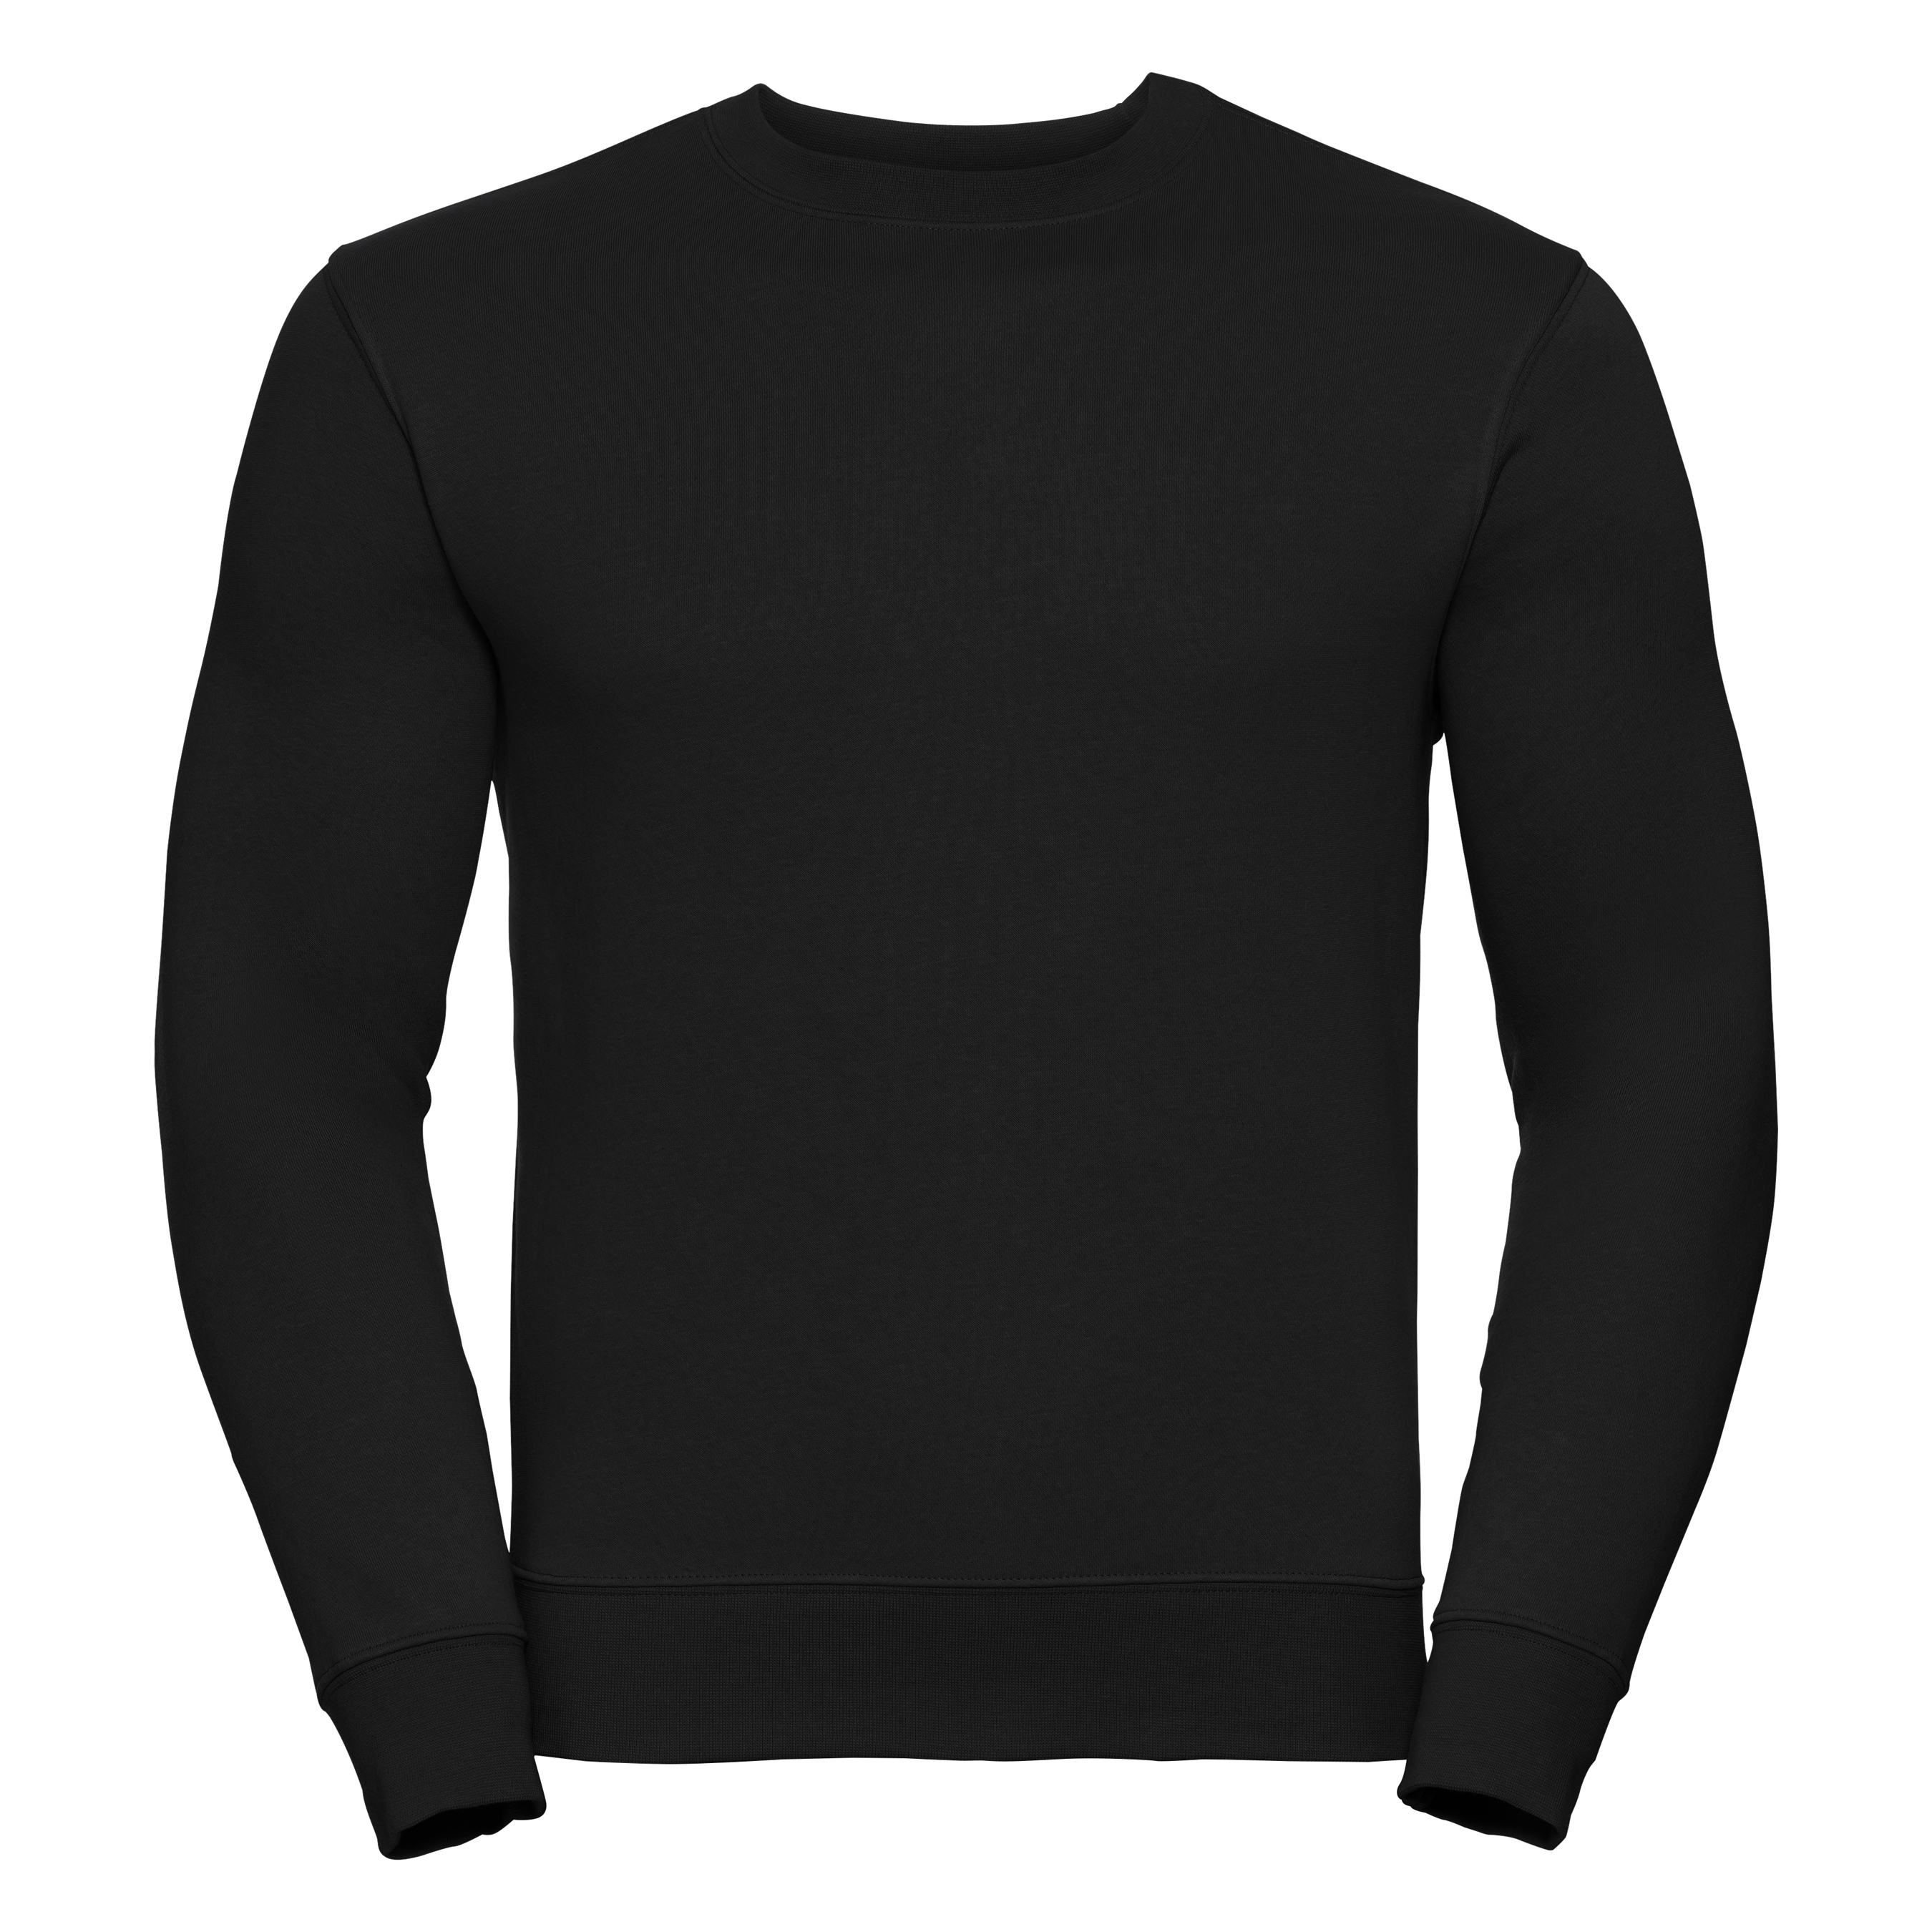 ax-httpswebsystems.s3.amazonaws.comtmp_for_downloadrussell-set-in-sleeve-sweatshirt-black.jpg